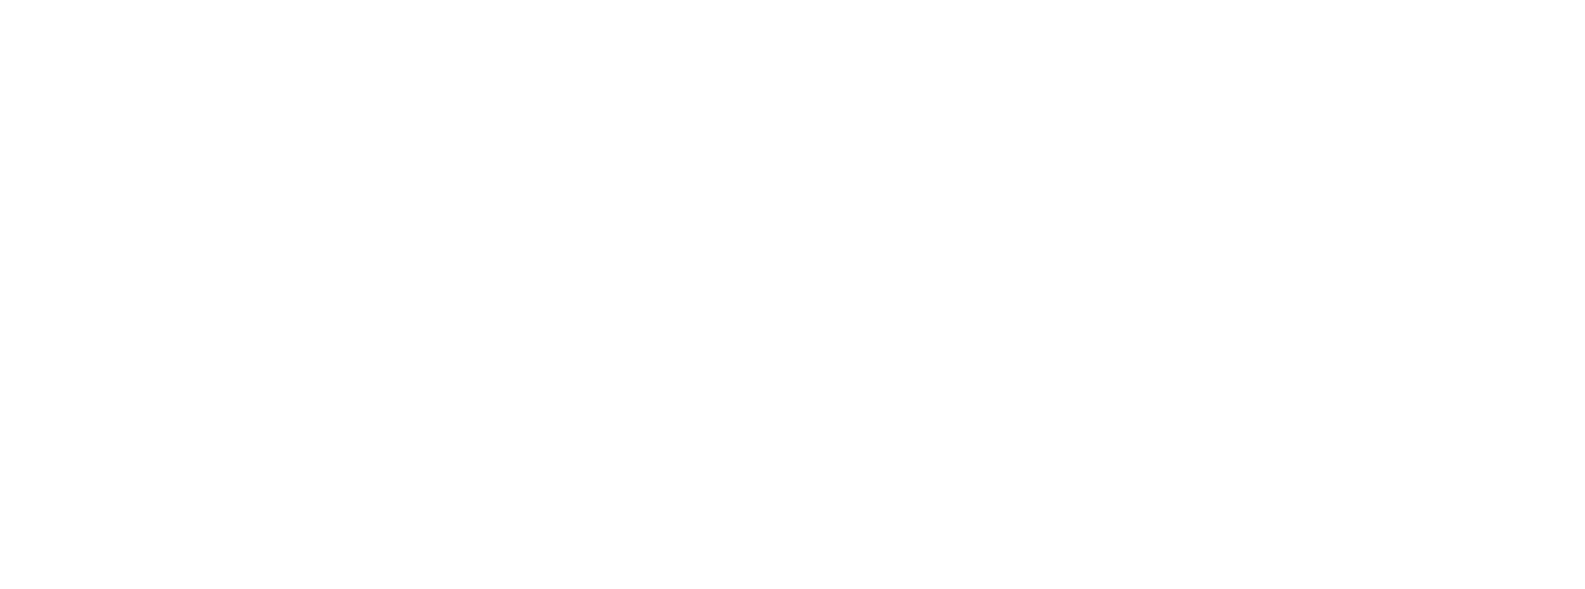 produced and bottled by produit et embouteillé par seven cedars winery in fuji kawaguchiko 7cwinery.com